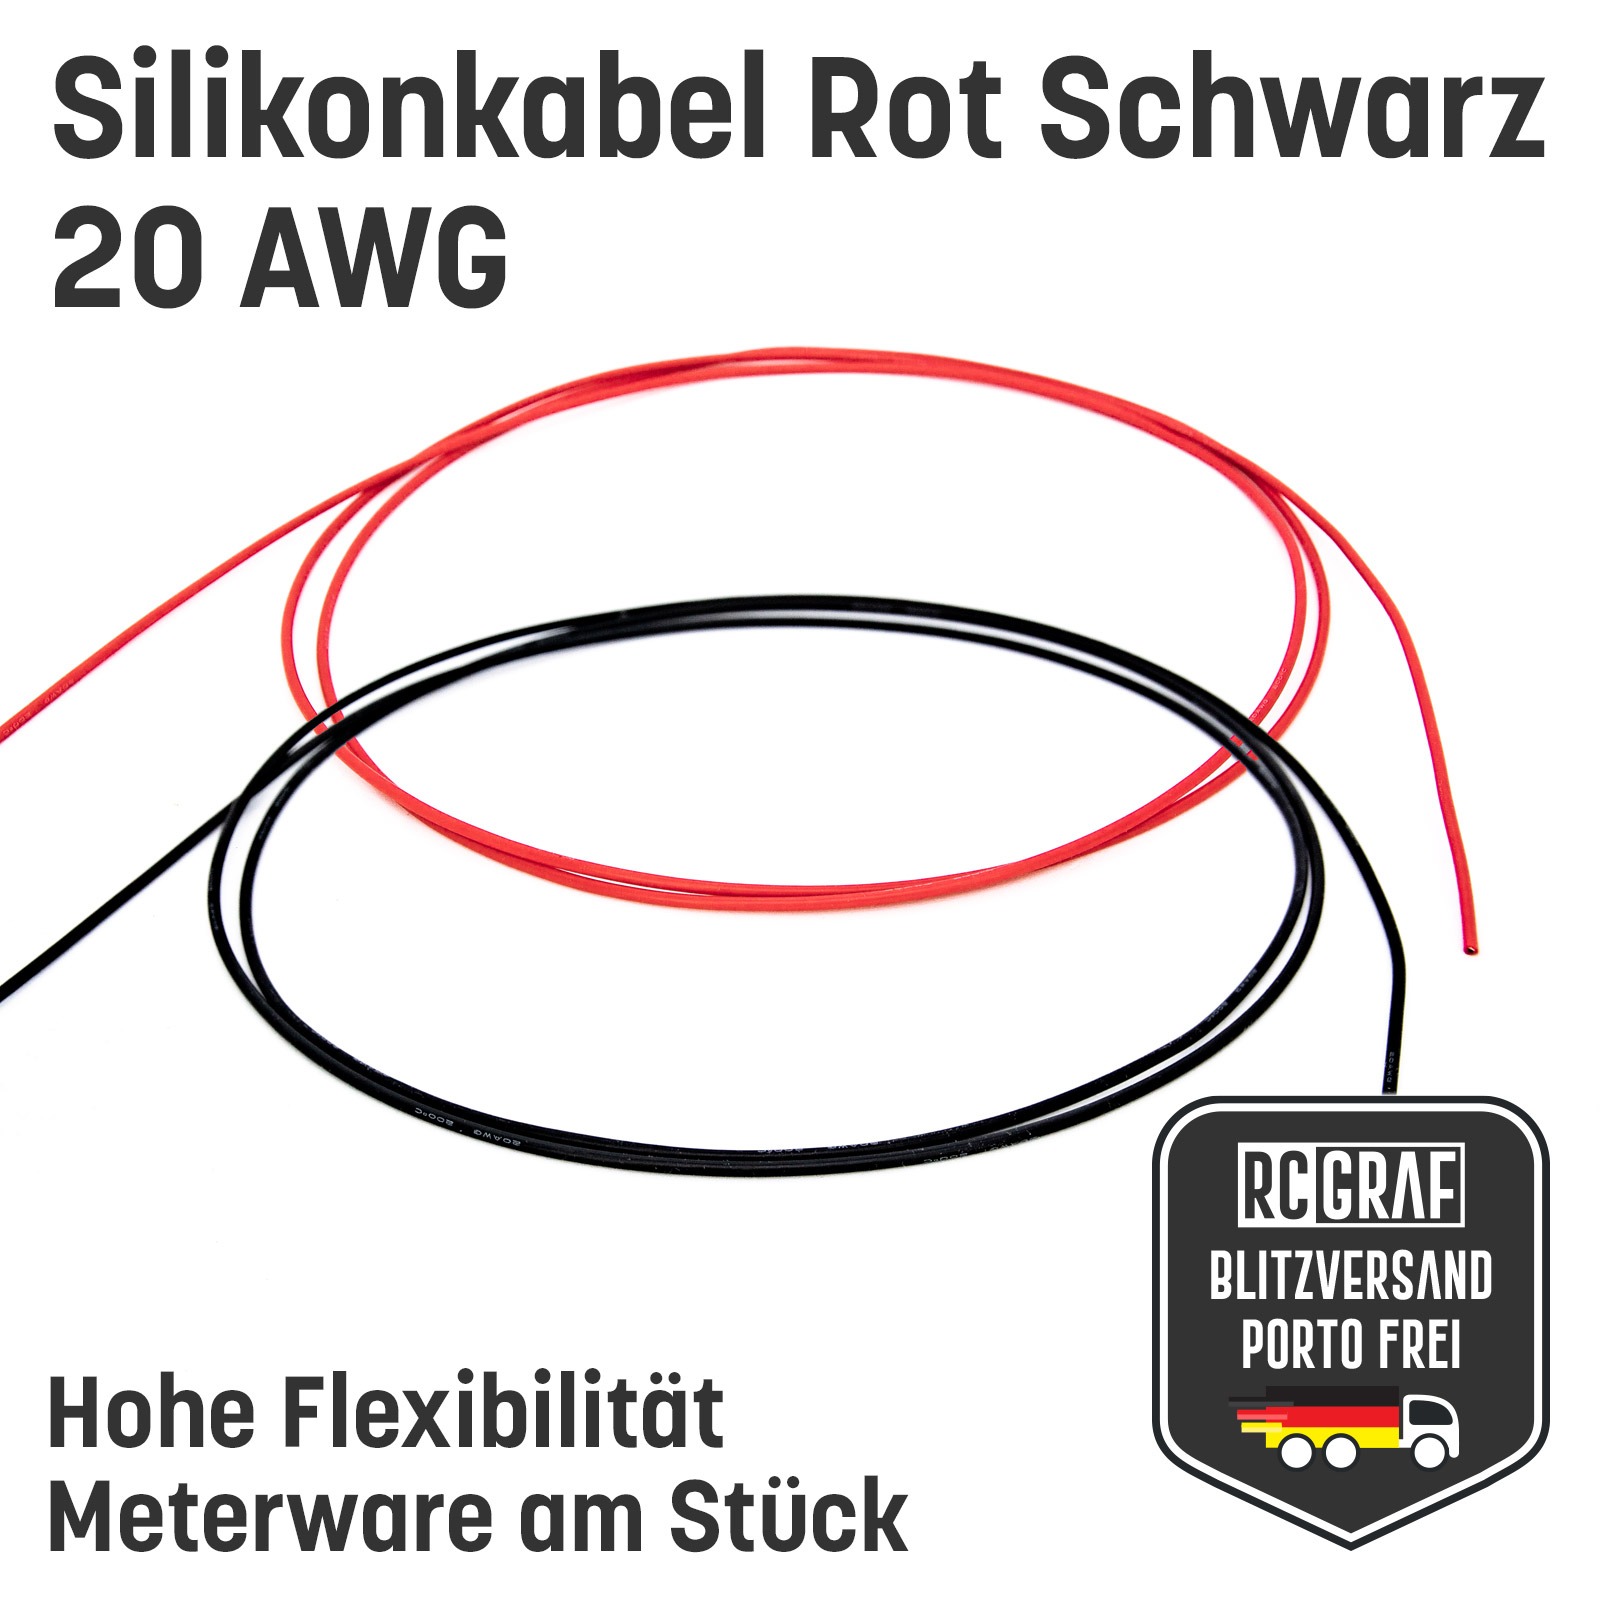 Silikonkabel 20 AWG hochflexibel Rot Schwarz Kupfer RC Kabel